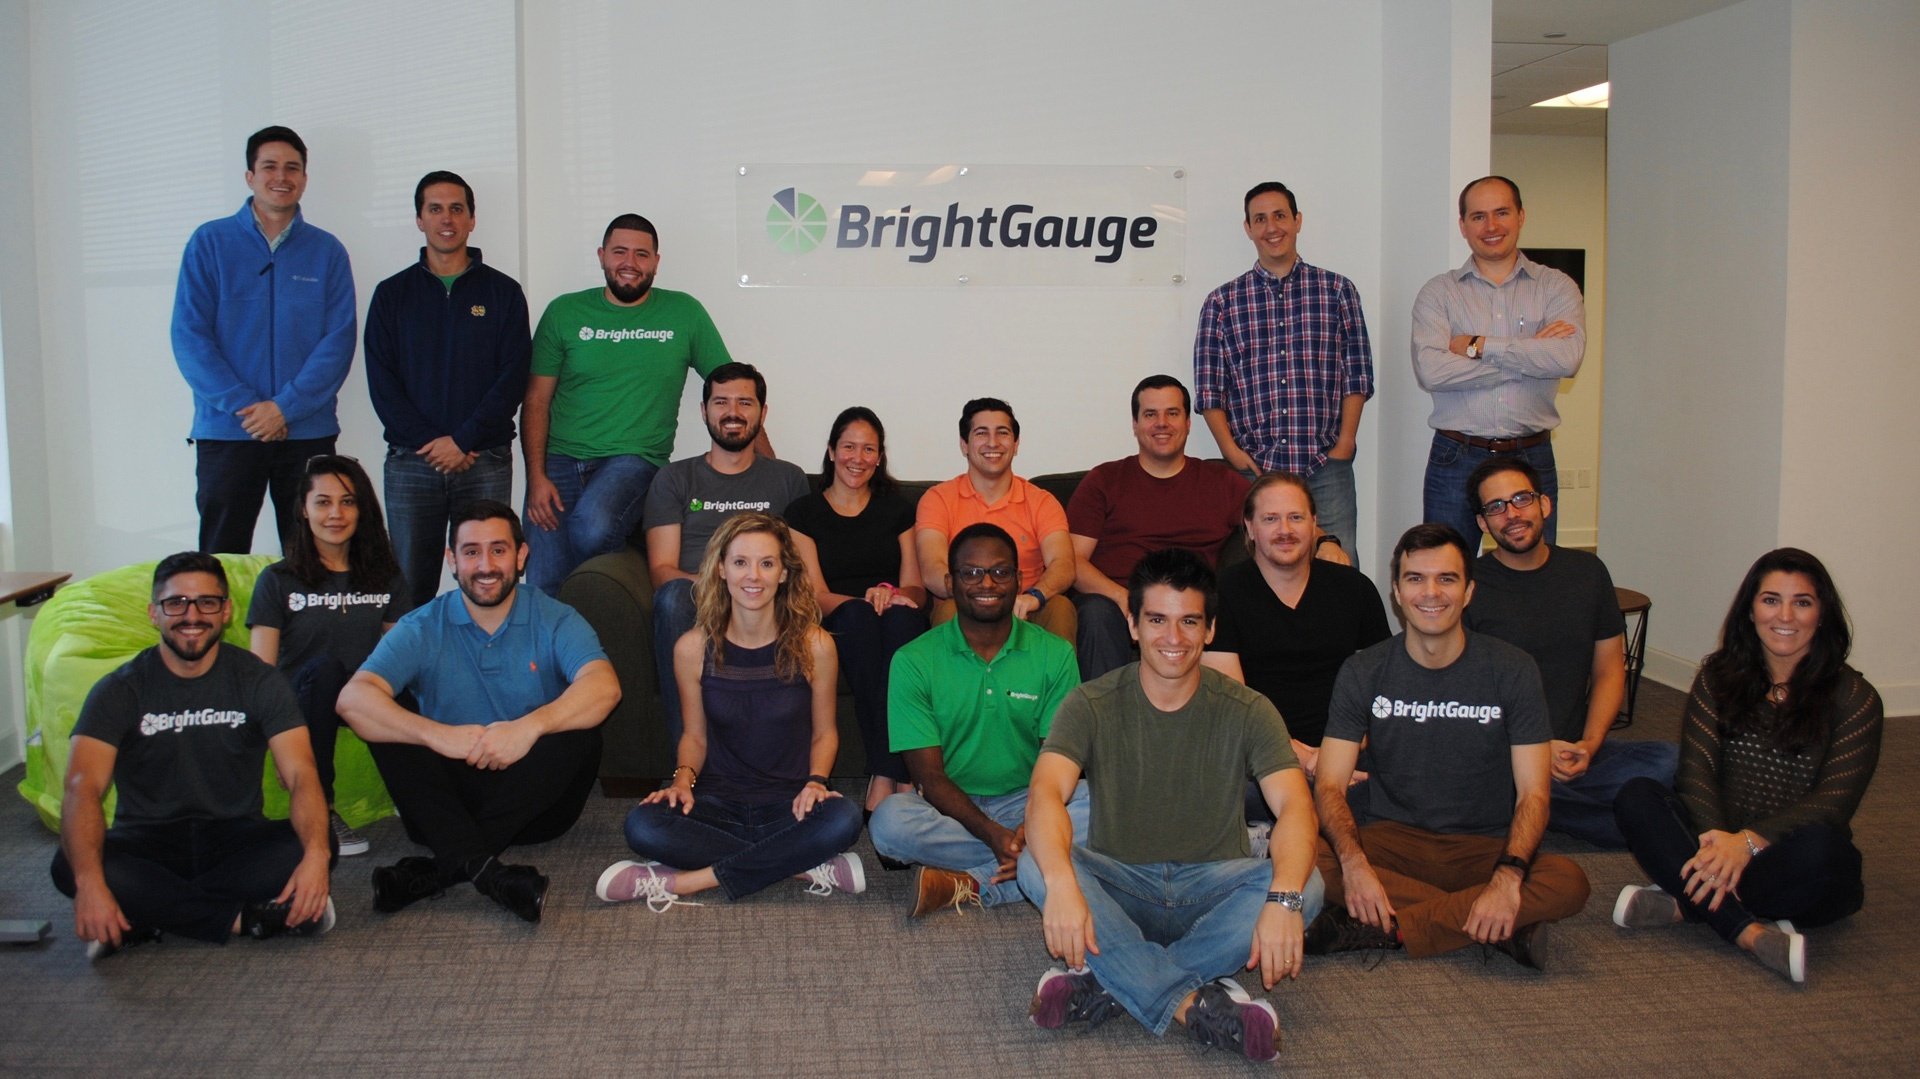 Christian Toivola joins BrightGauge as Senior Web Developer